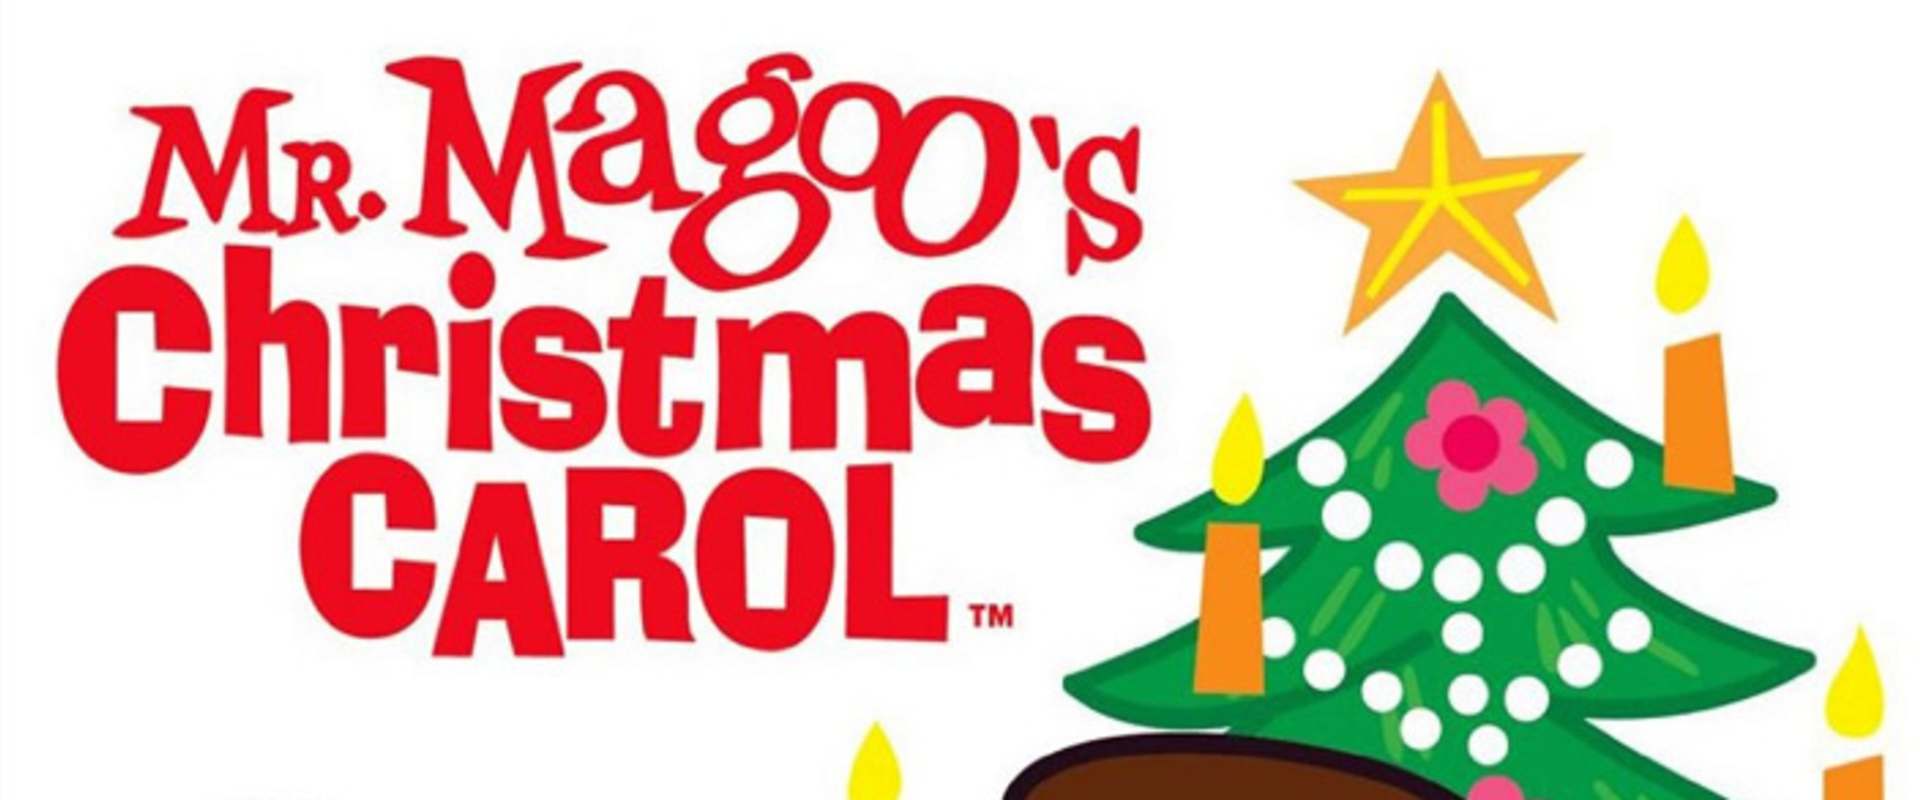 Mister Magoo's Christmas Carol background 1